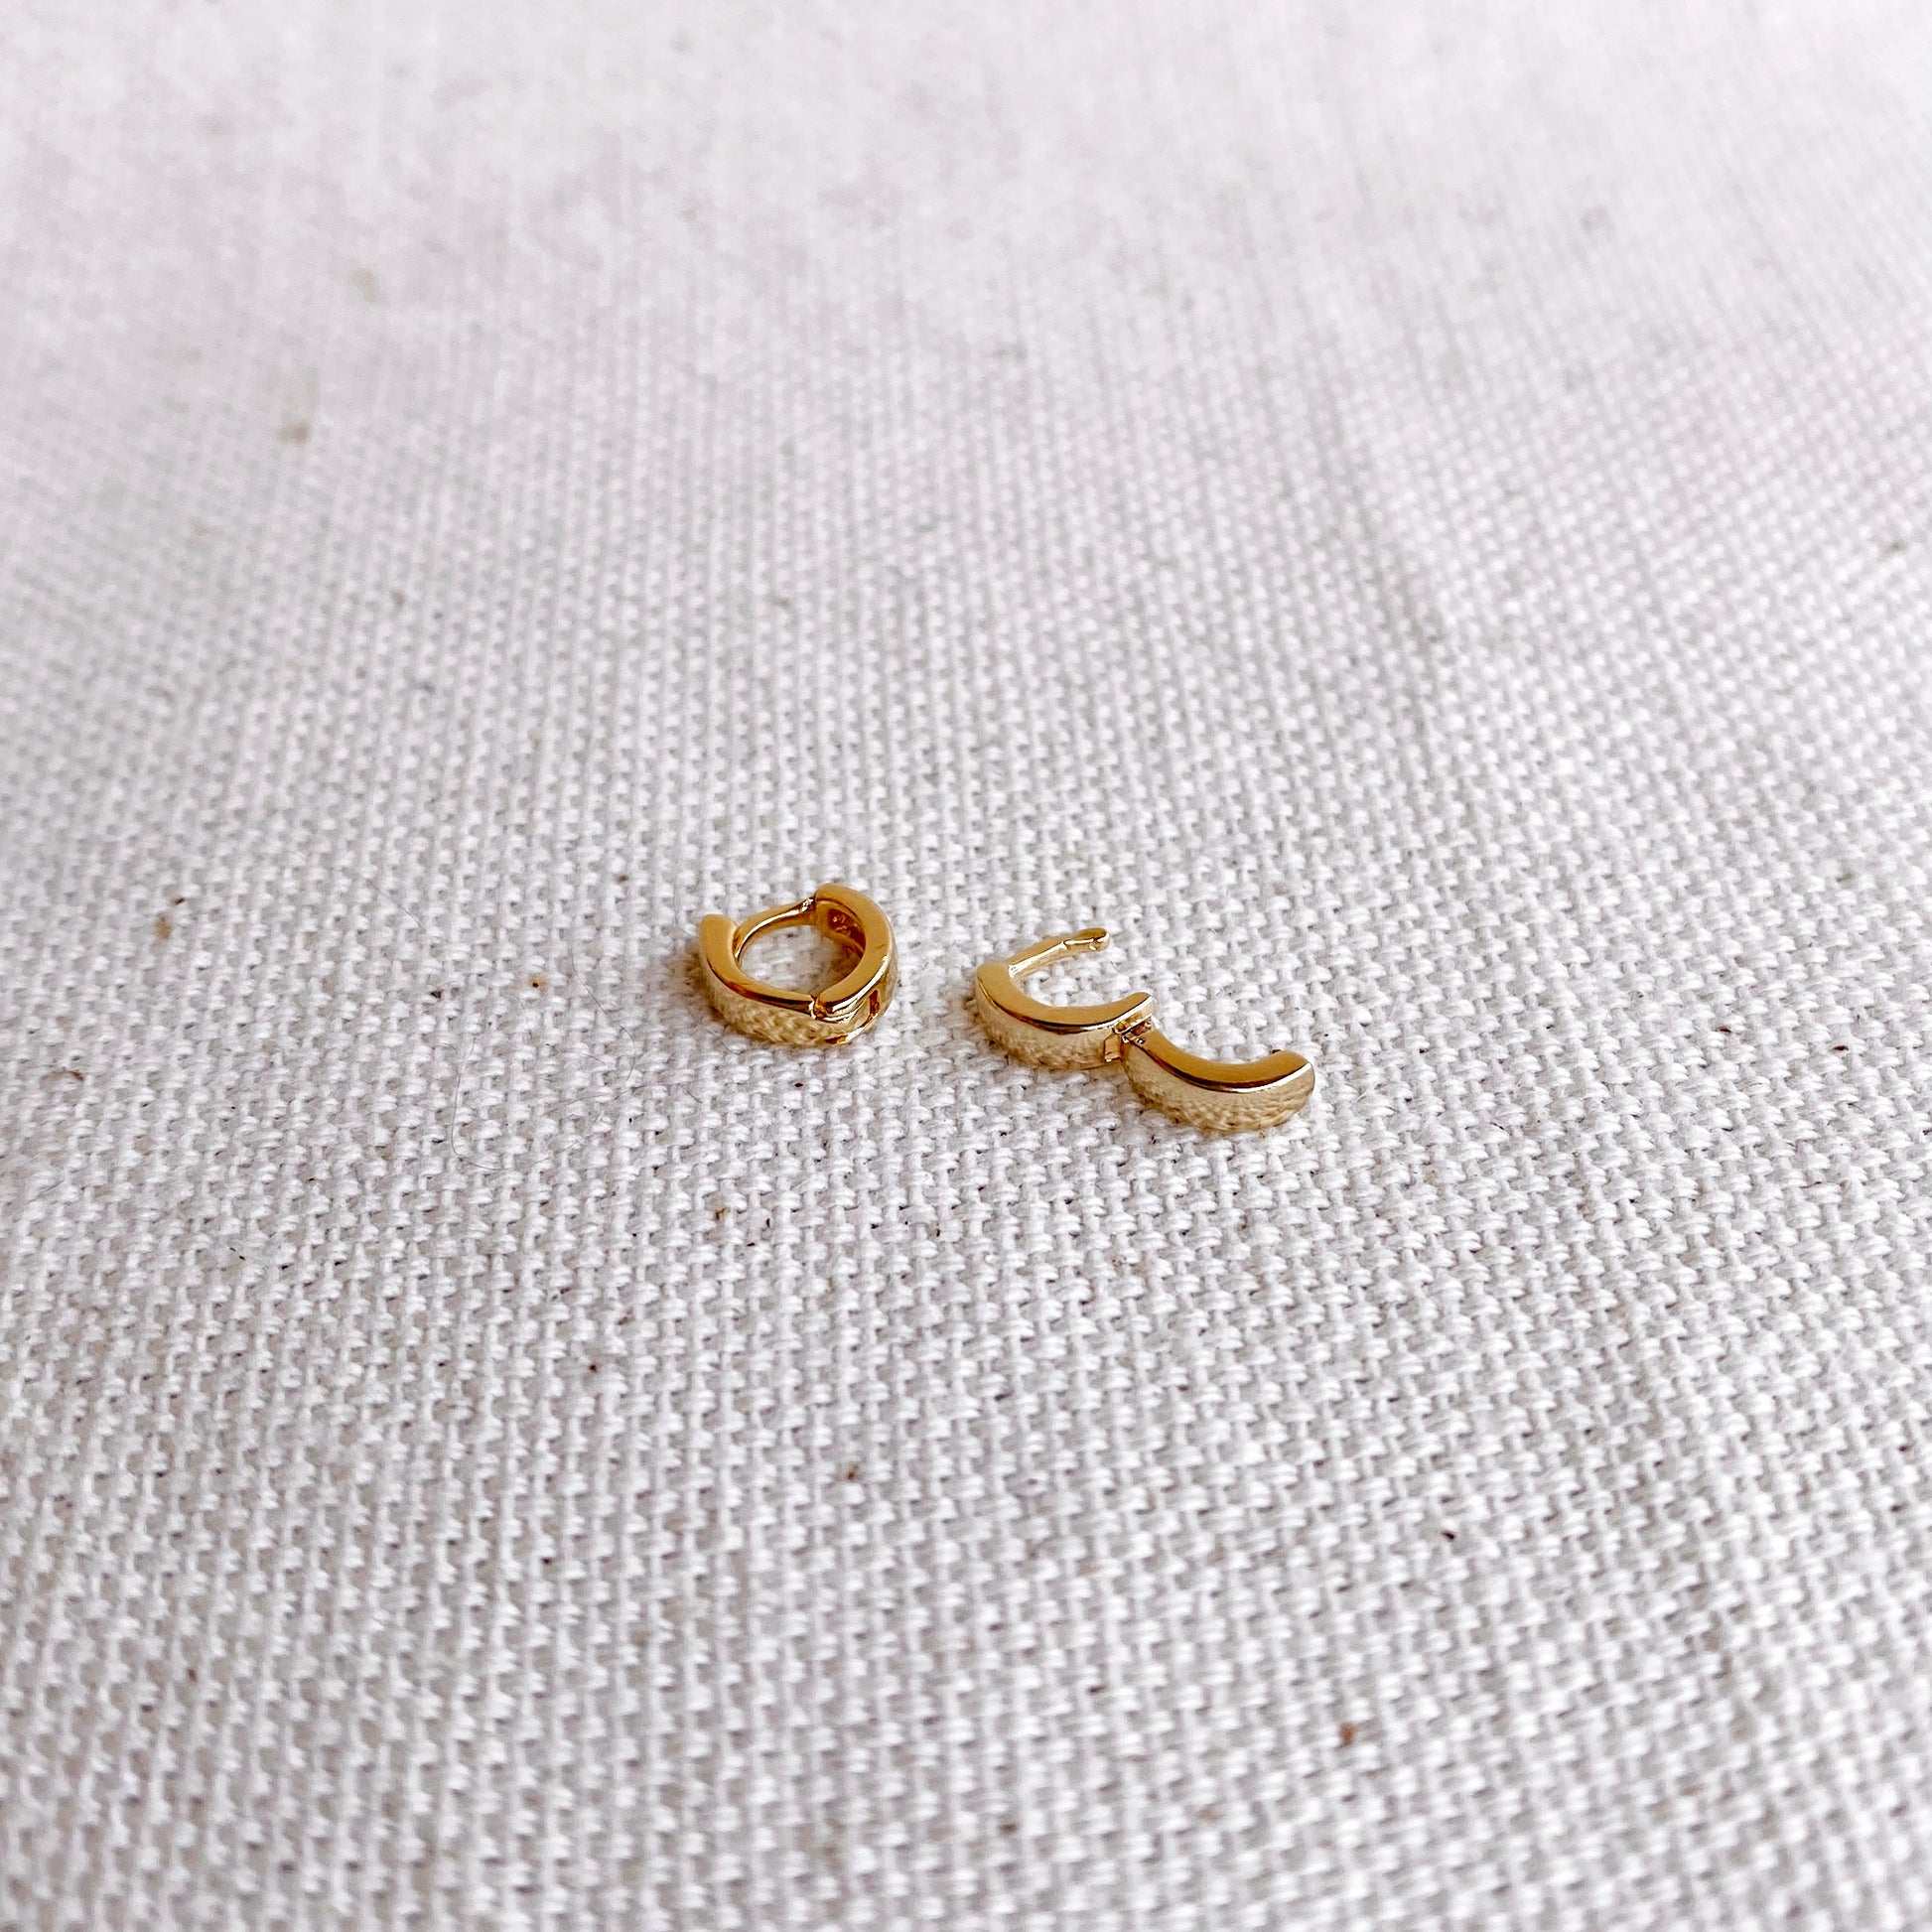 GoldFi 18k Gold Filled Petite Hoop Earrings